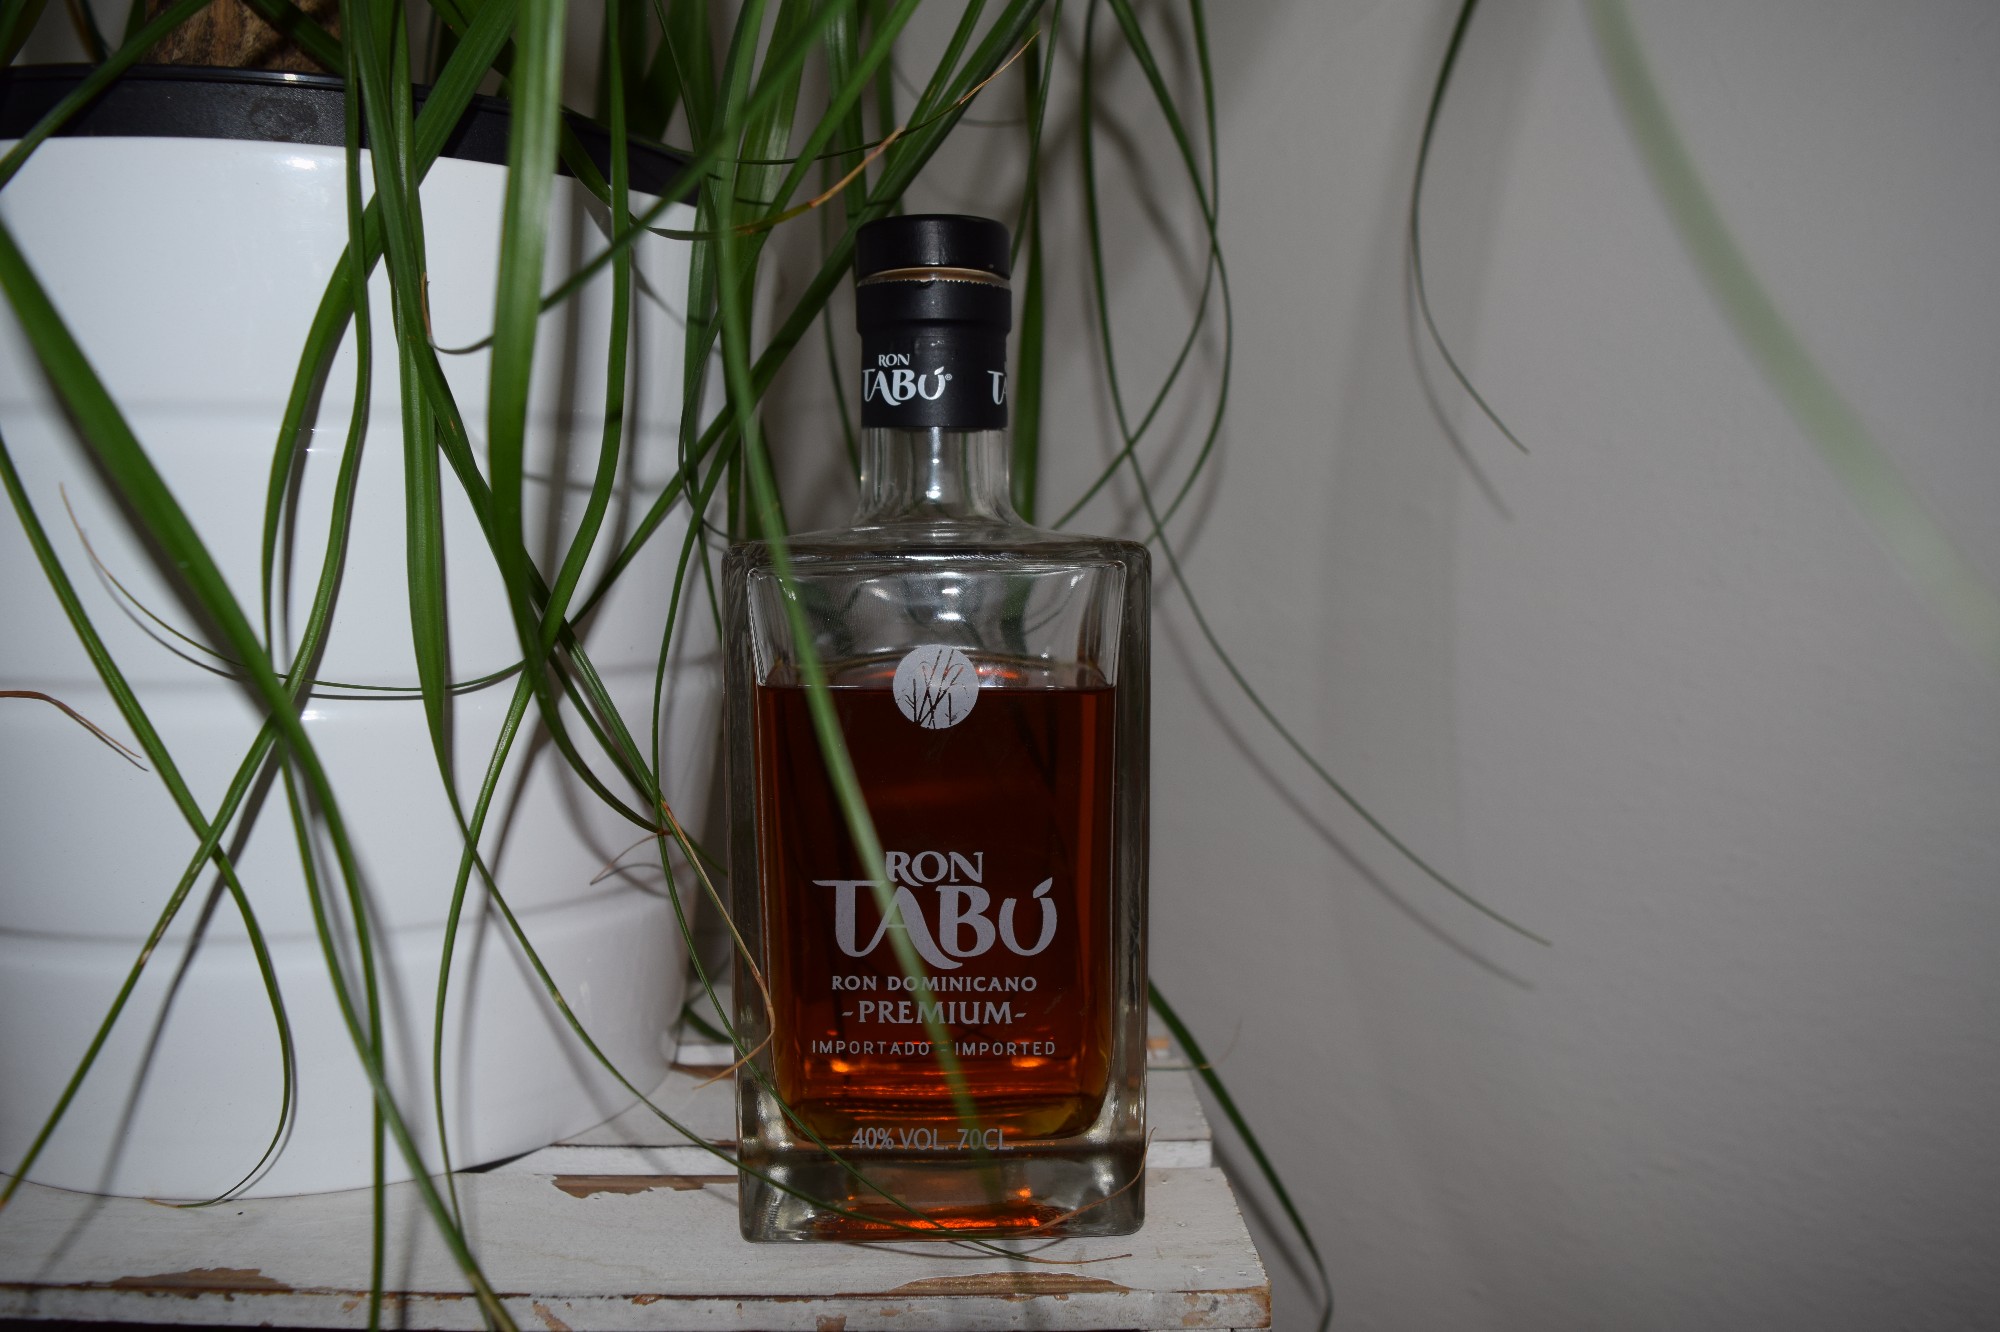 Photo of the bottle taken from user Blaidor